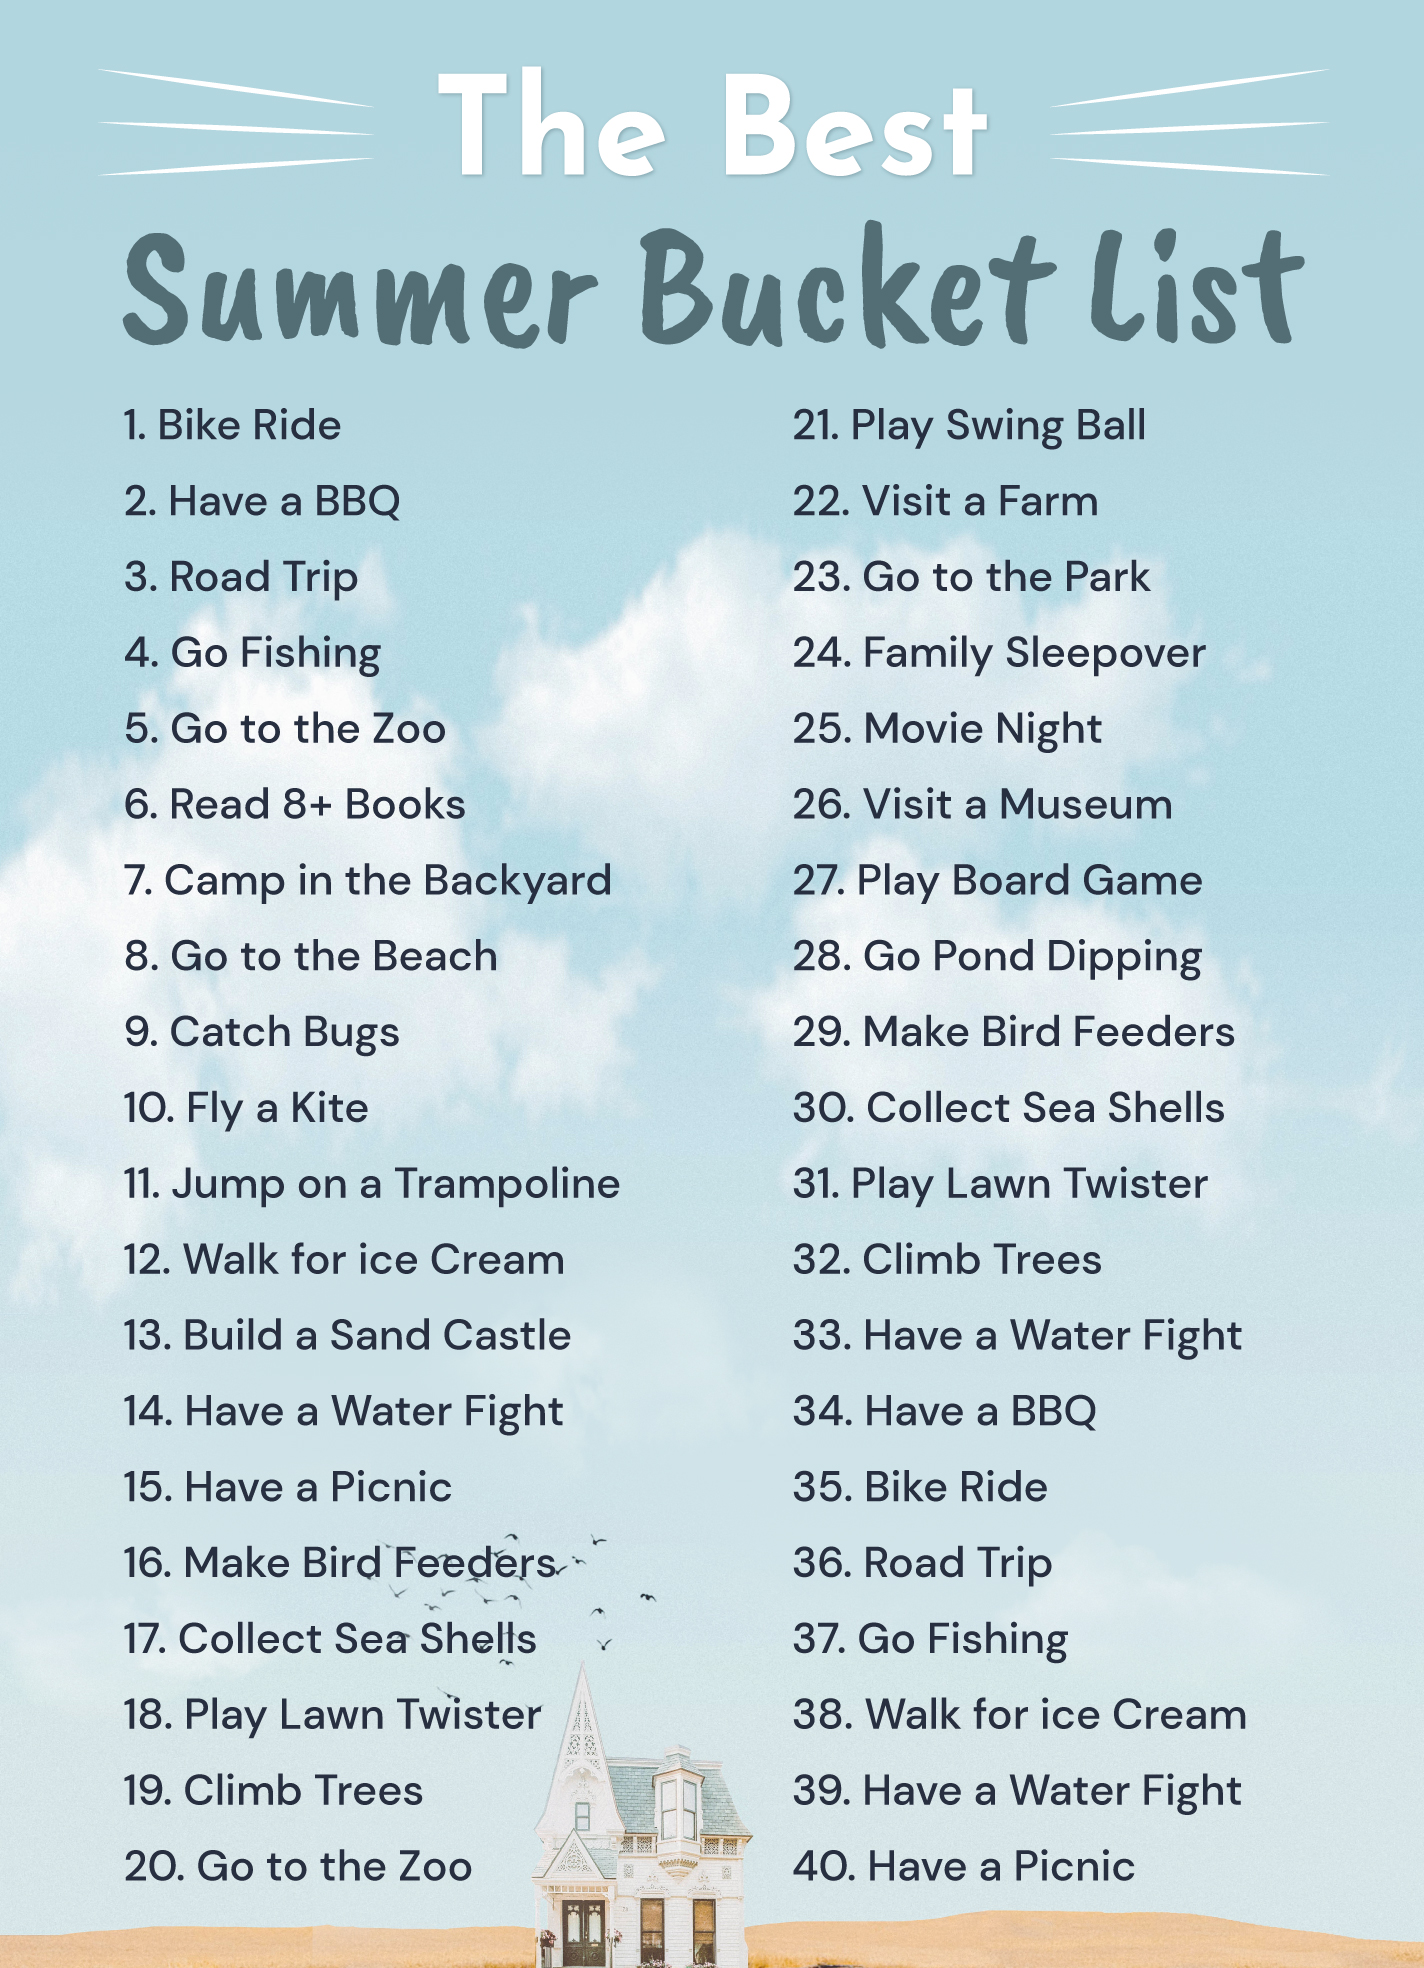 https://gdoc.io/uploads/Summer-bucket-list-2-web.jpg